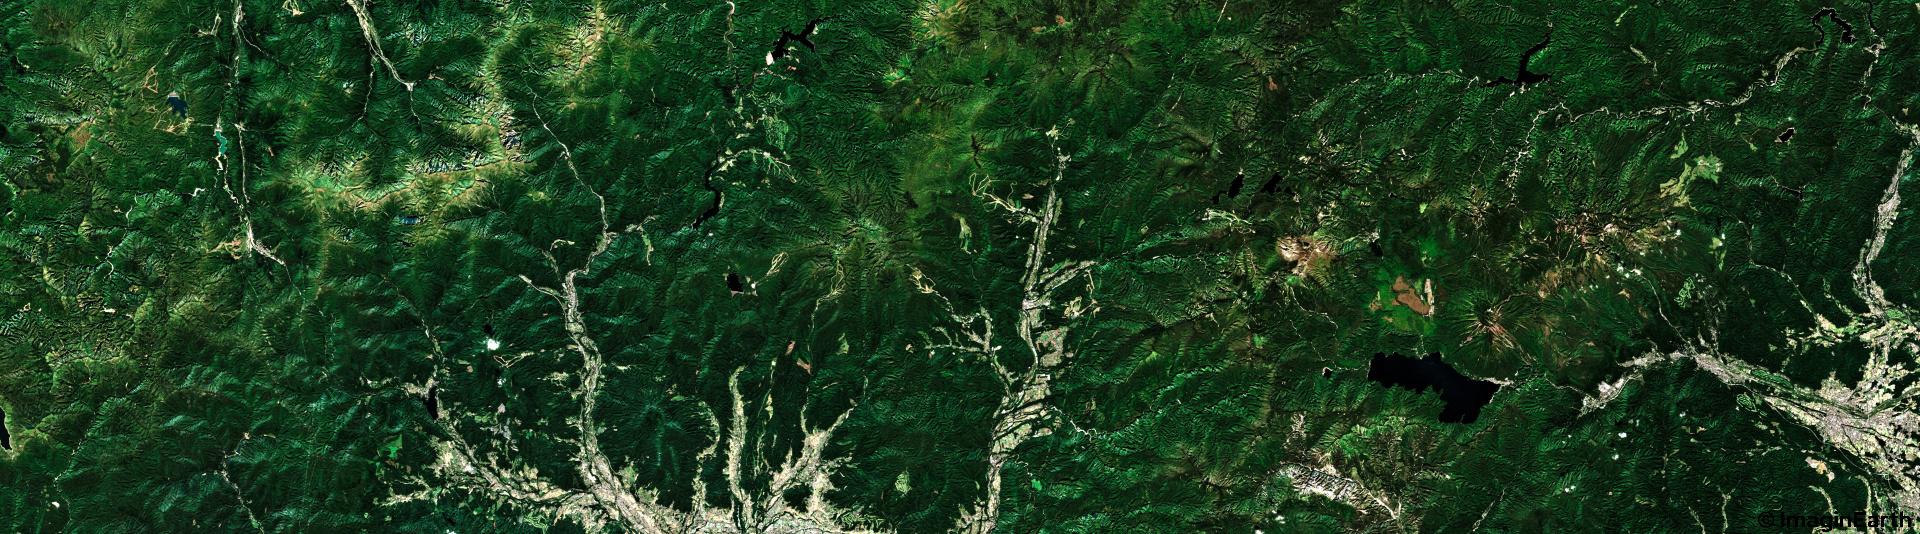 voyager en asie, photo satellite